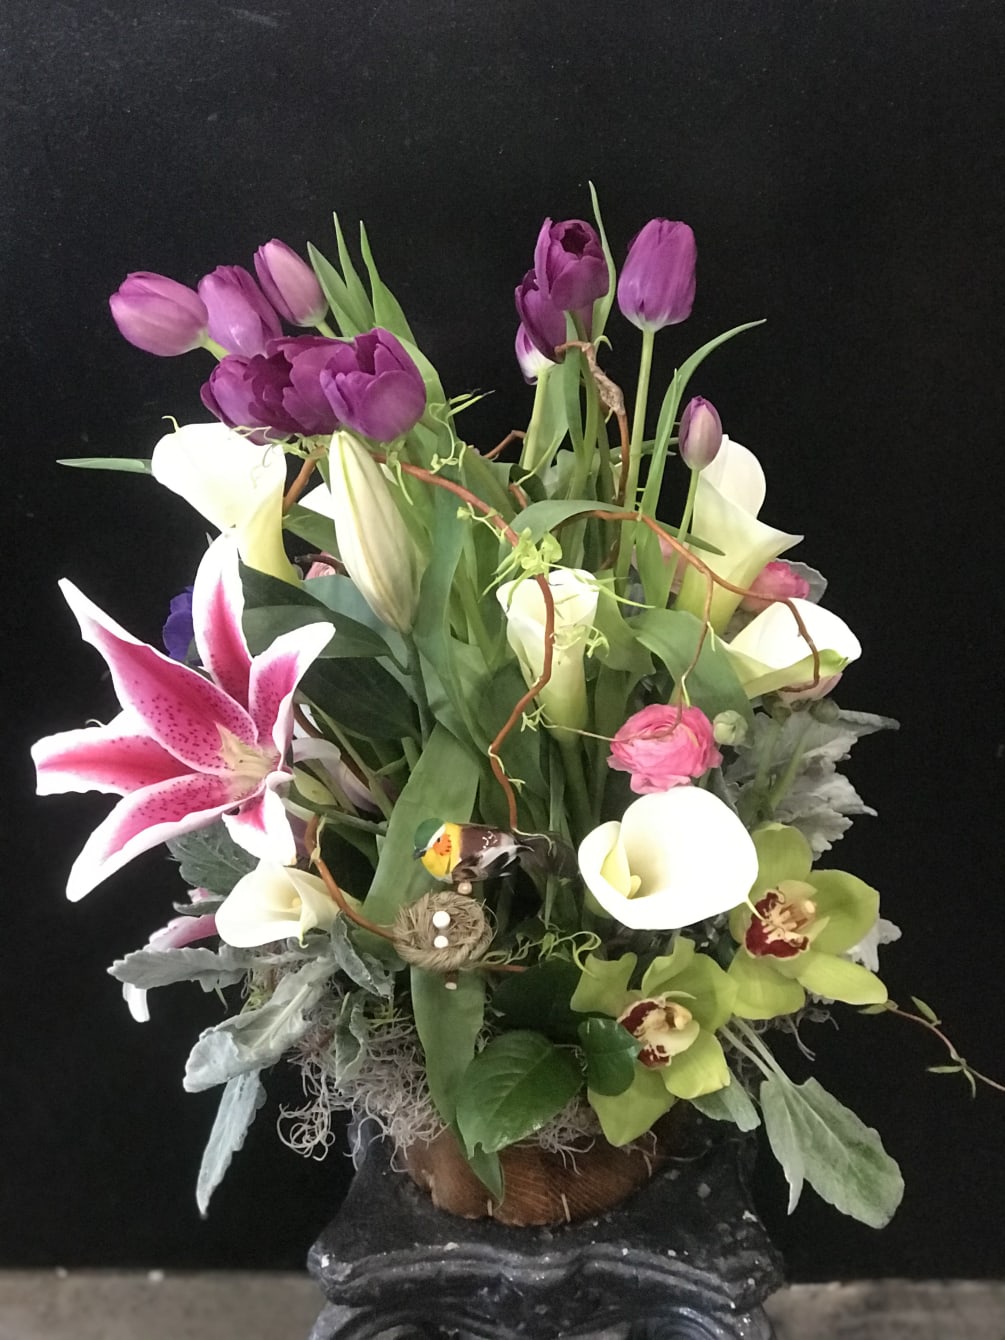 Tulips, Calla lilies, cymbidium orchids, Stargazer lilies